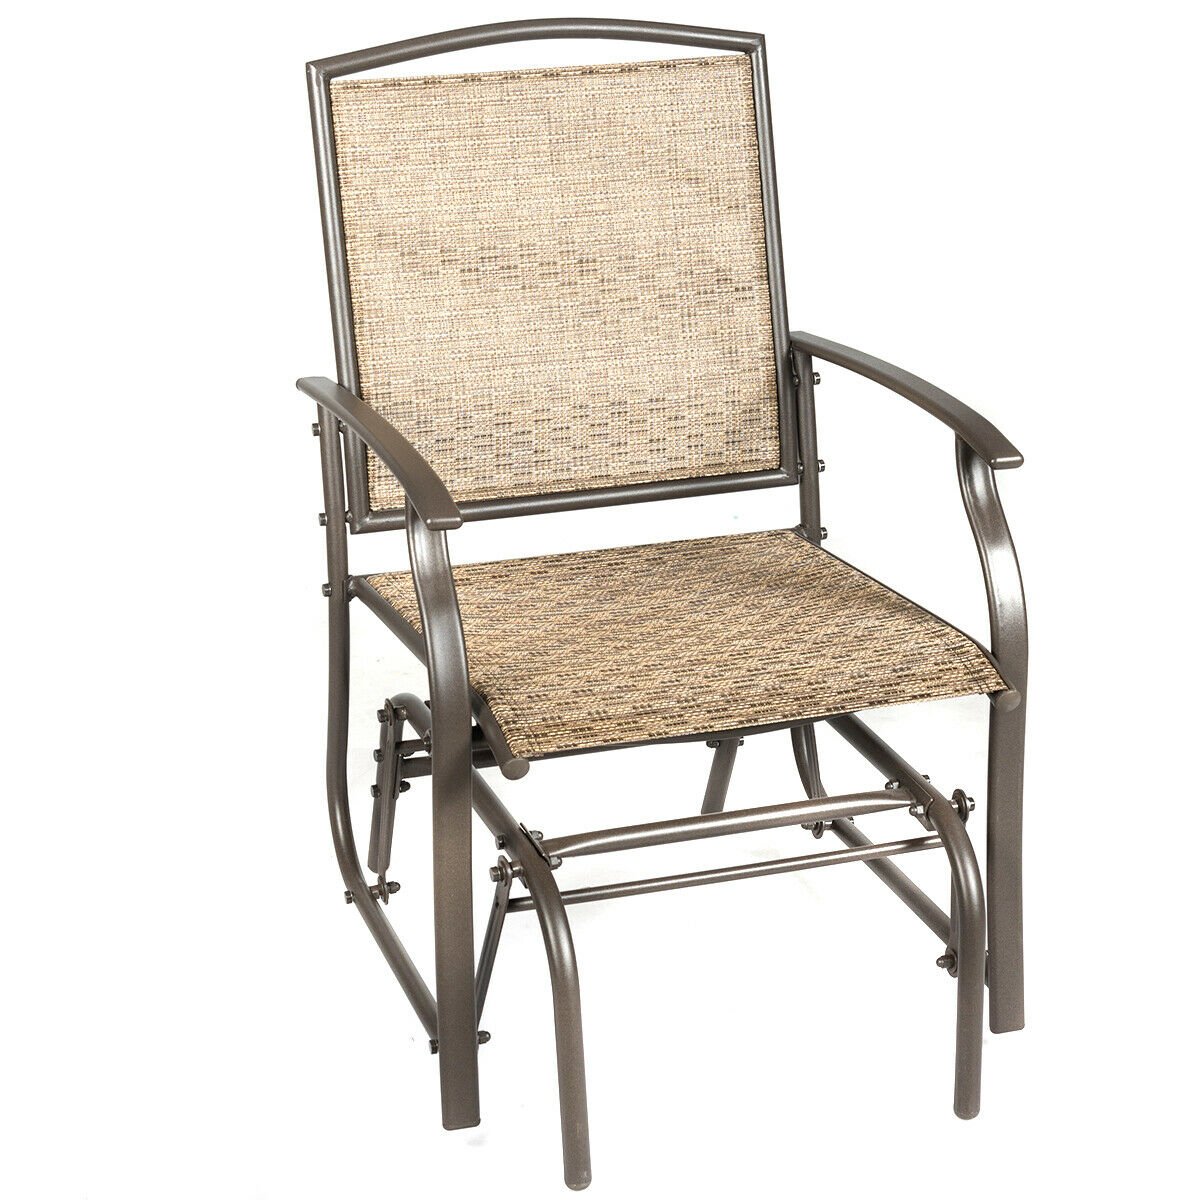 Steel Frame Garden Swing Single Glider Chair Rocking Seating, Brown - Gallery Canada